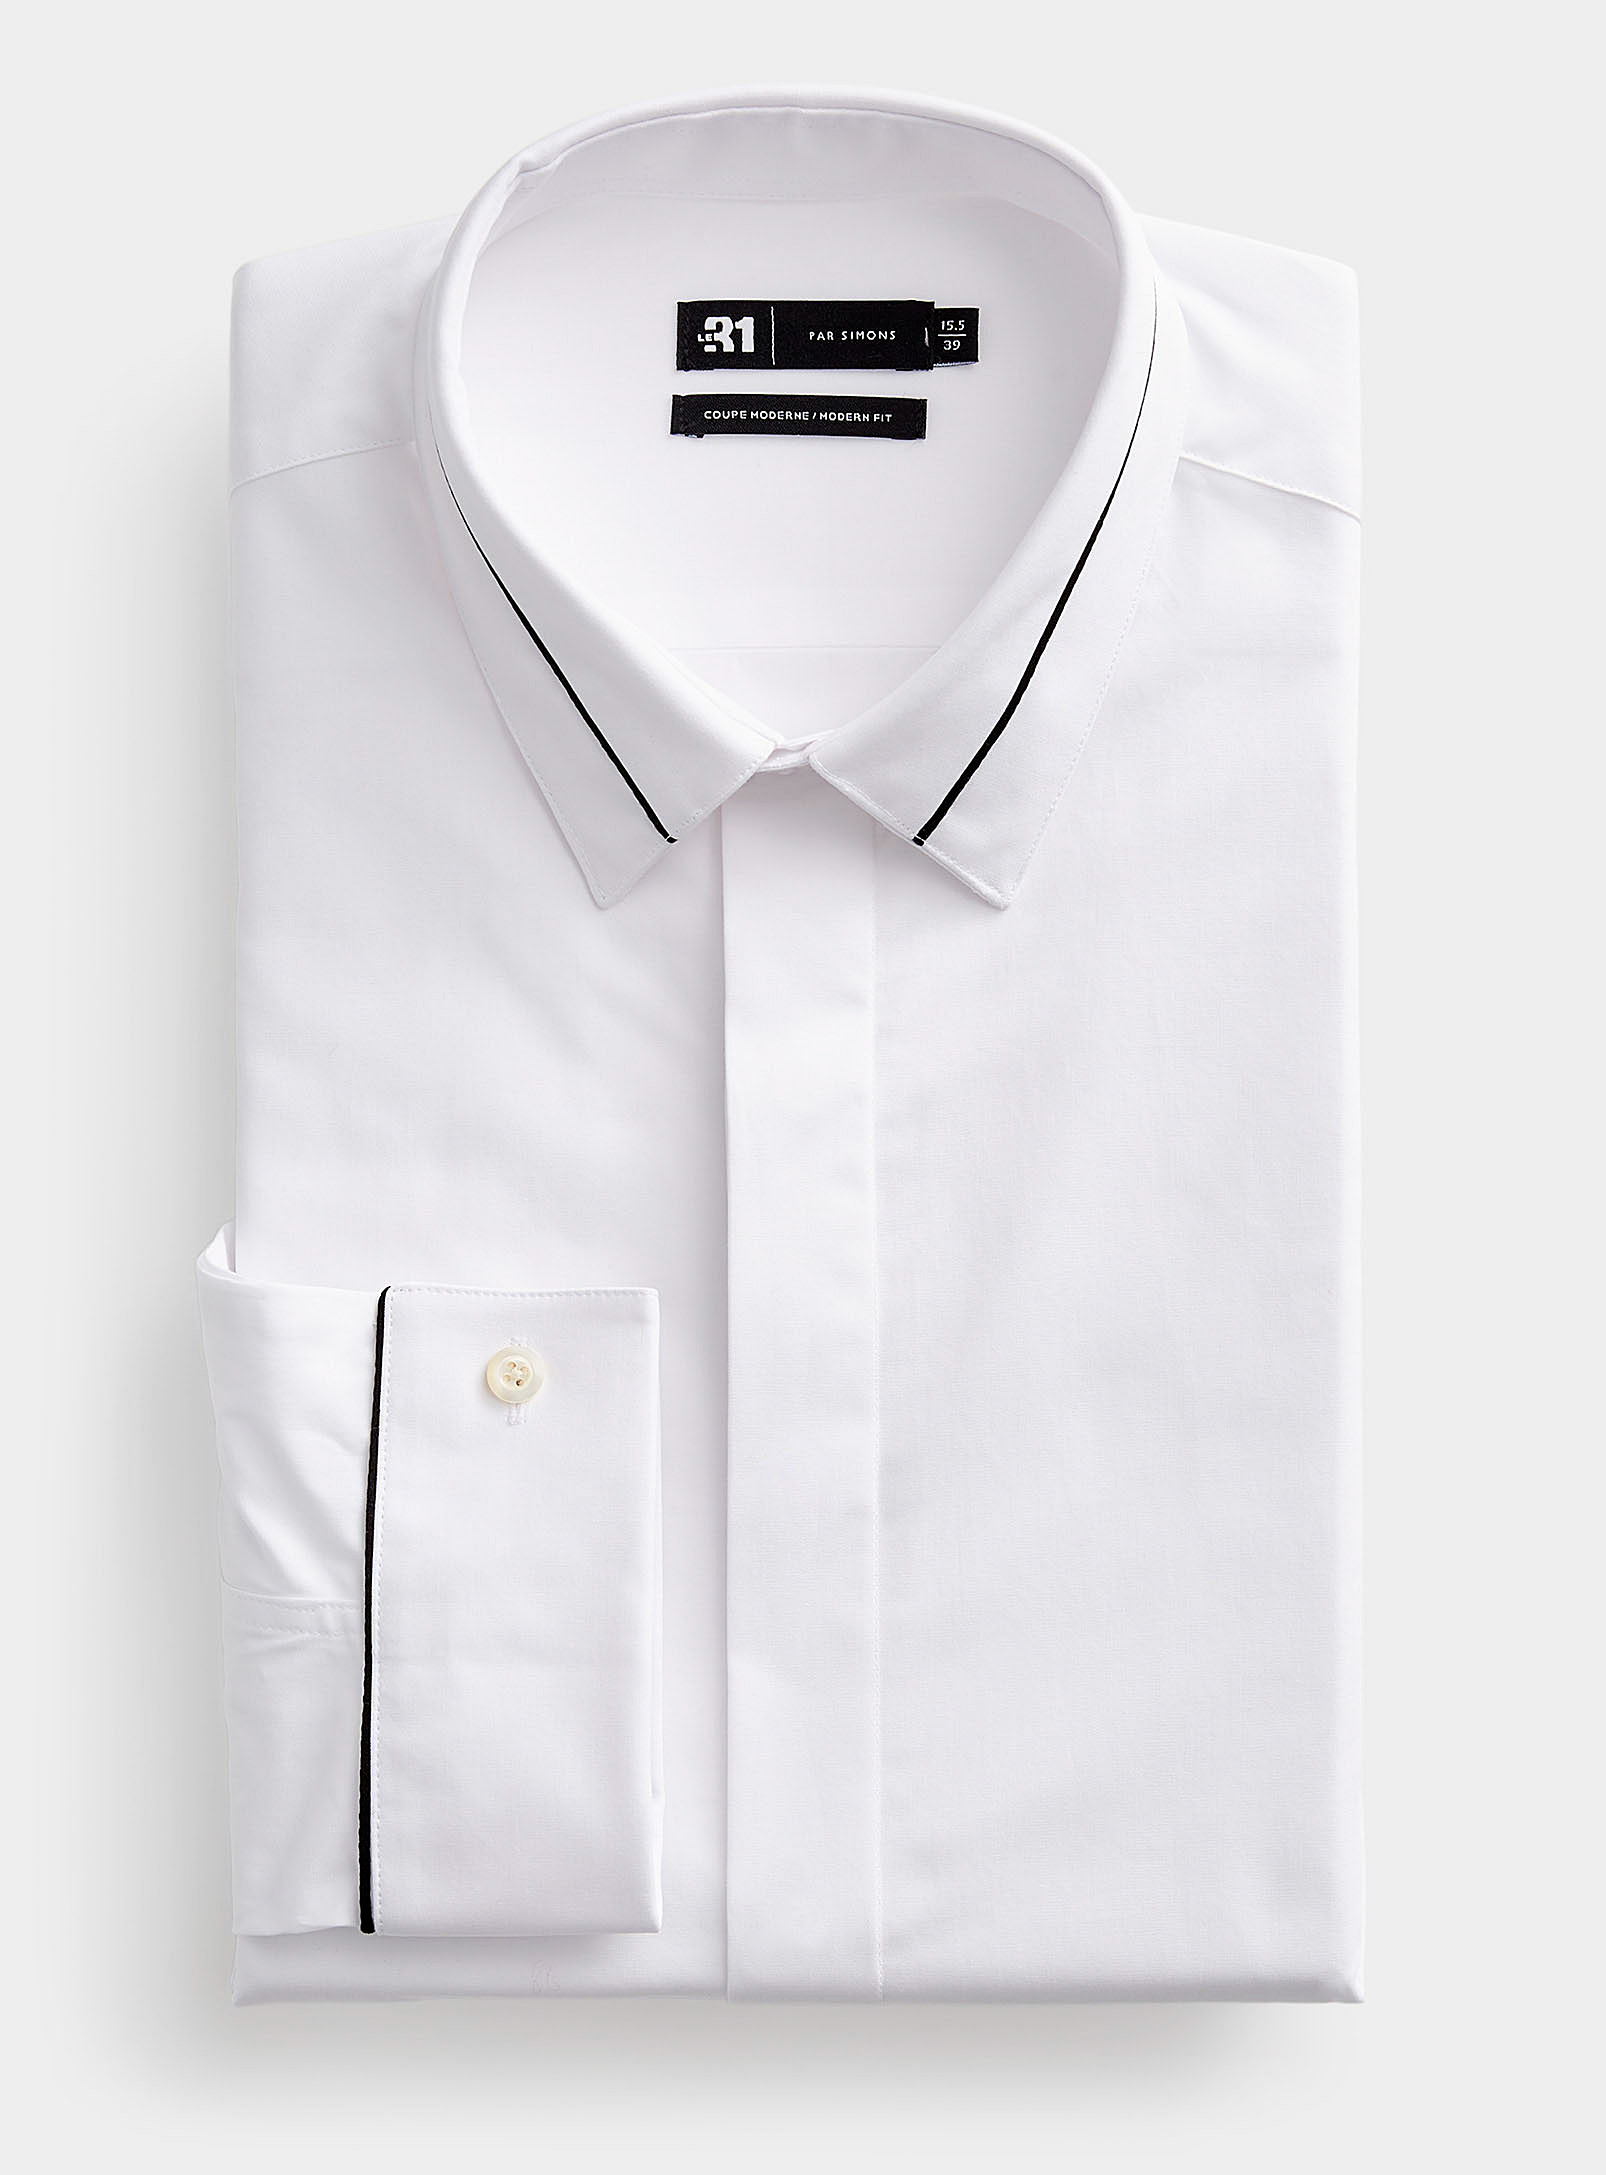 Le 31 - Men's Black trim white shirt Modern fit